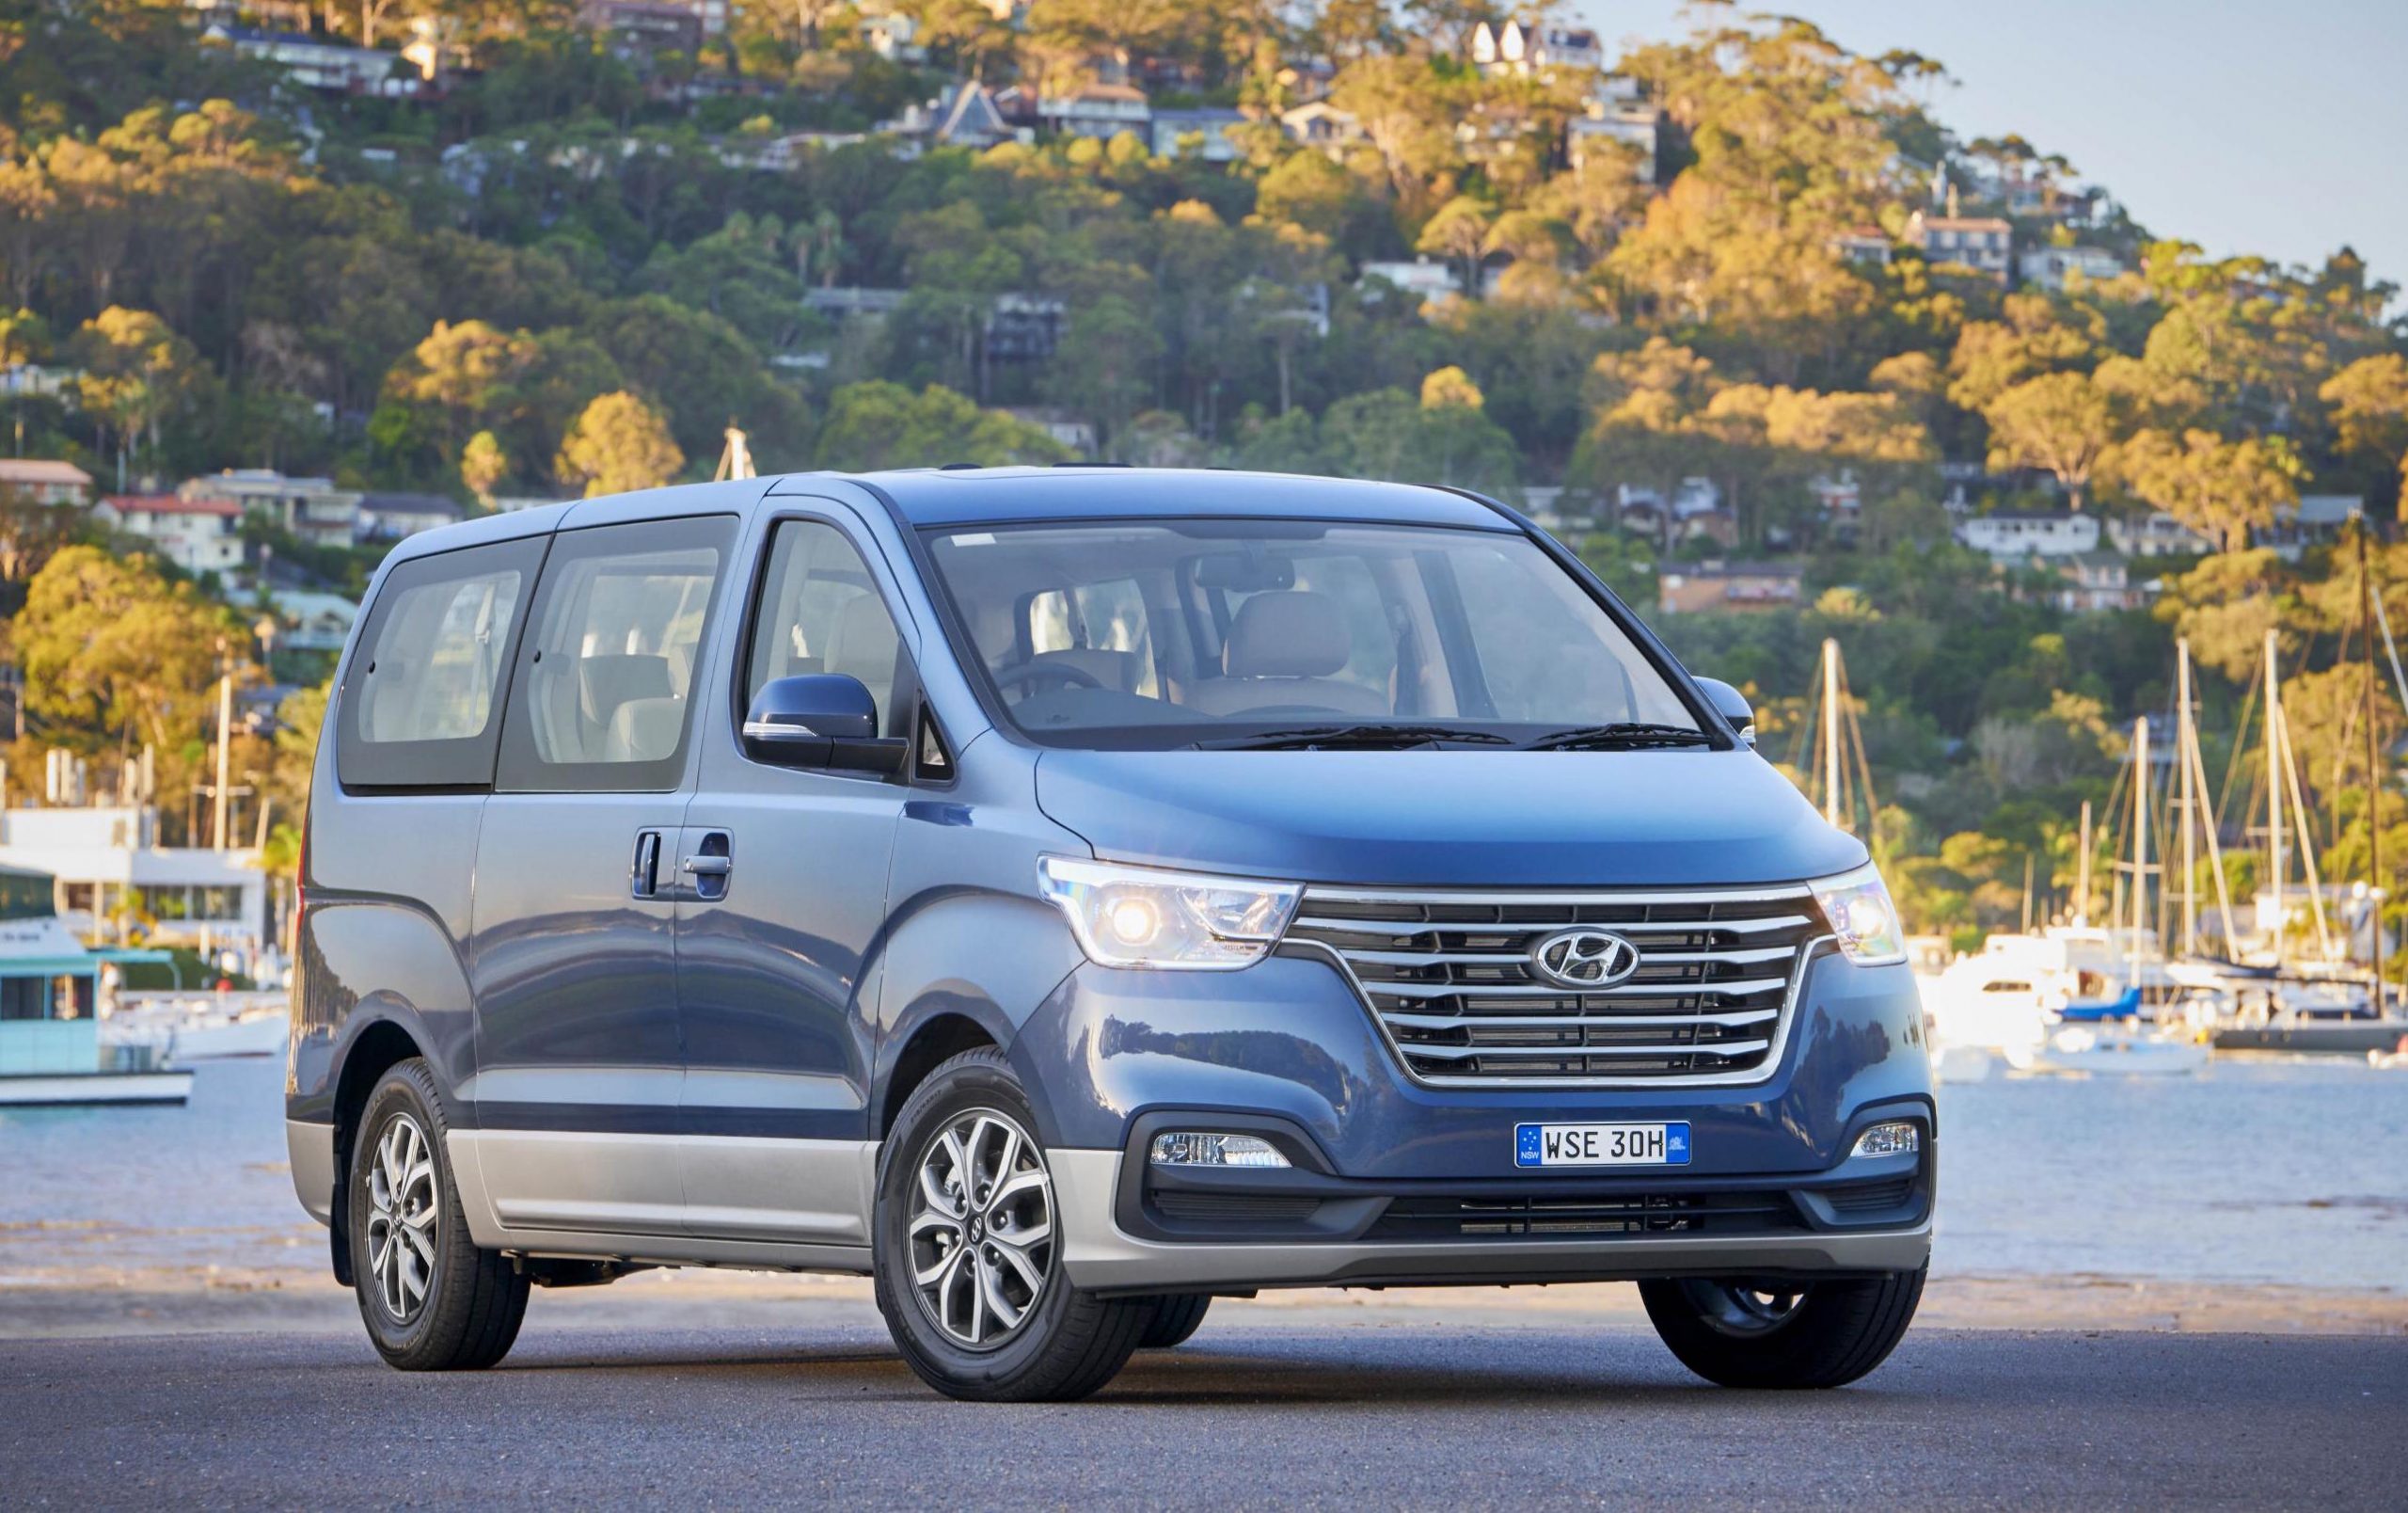 2019 Hyundai iLoad & iMax get smart new look, now on sale in Australia